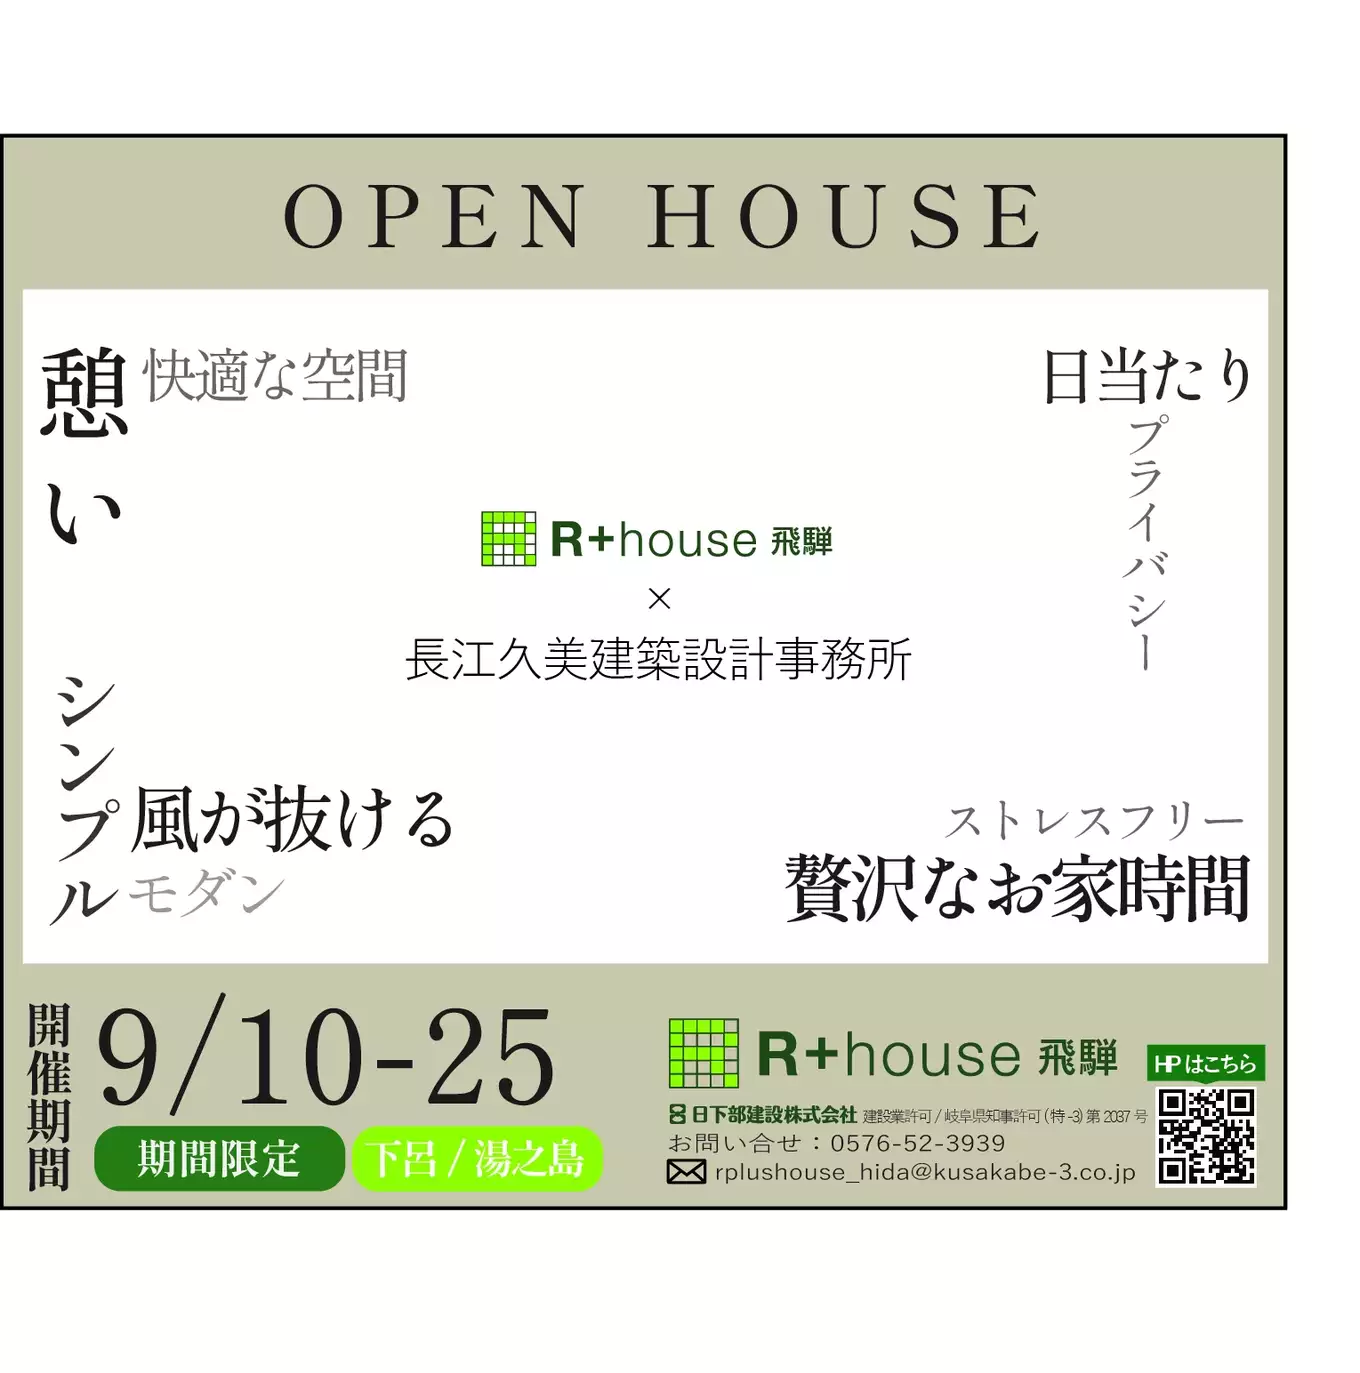 R+house飛騨の完成見学会の広告です。物件の特徴を表す文字と開催日時等の情報があります。